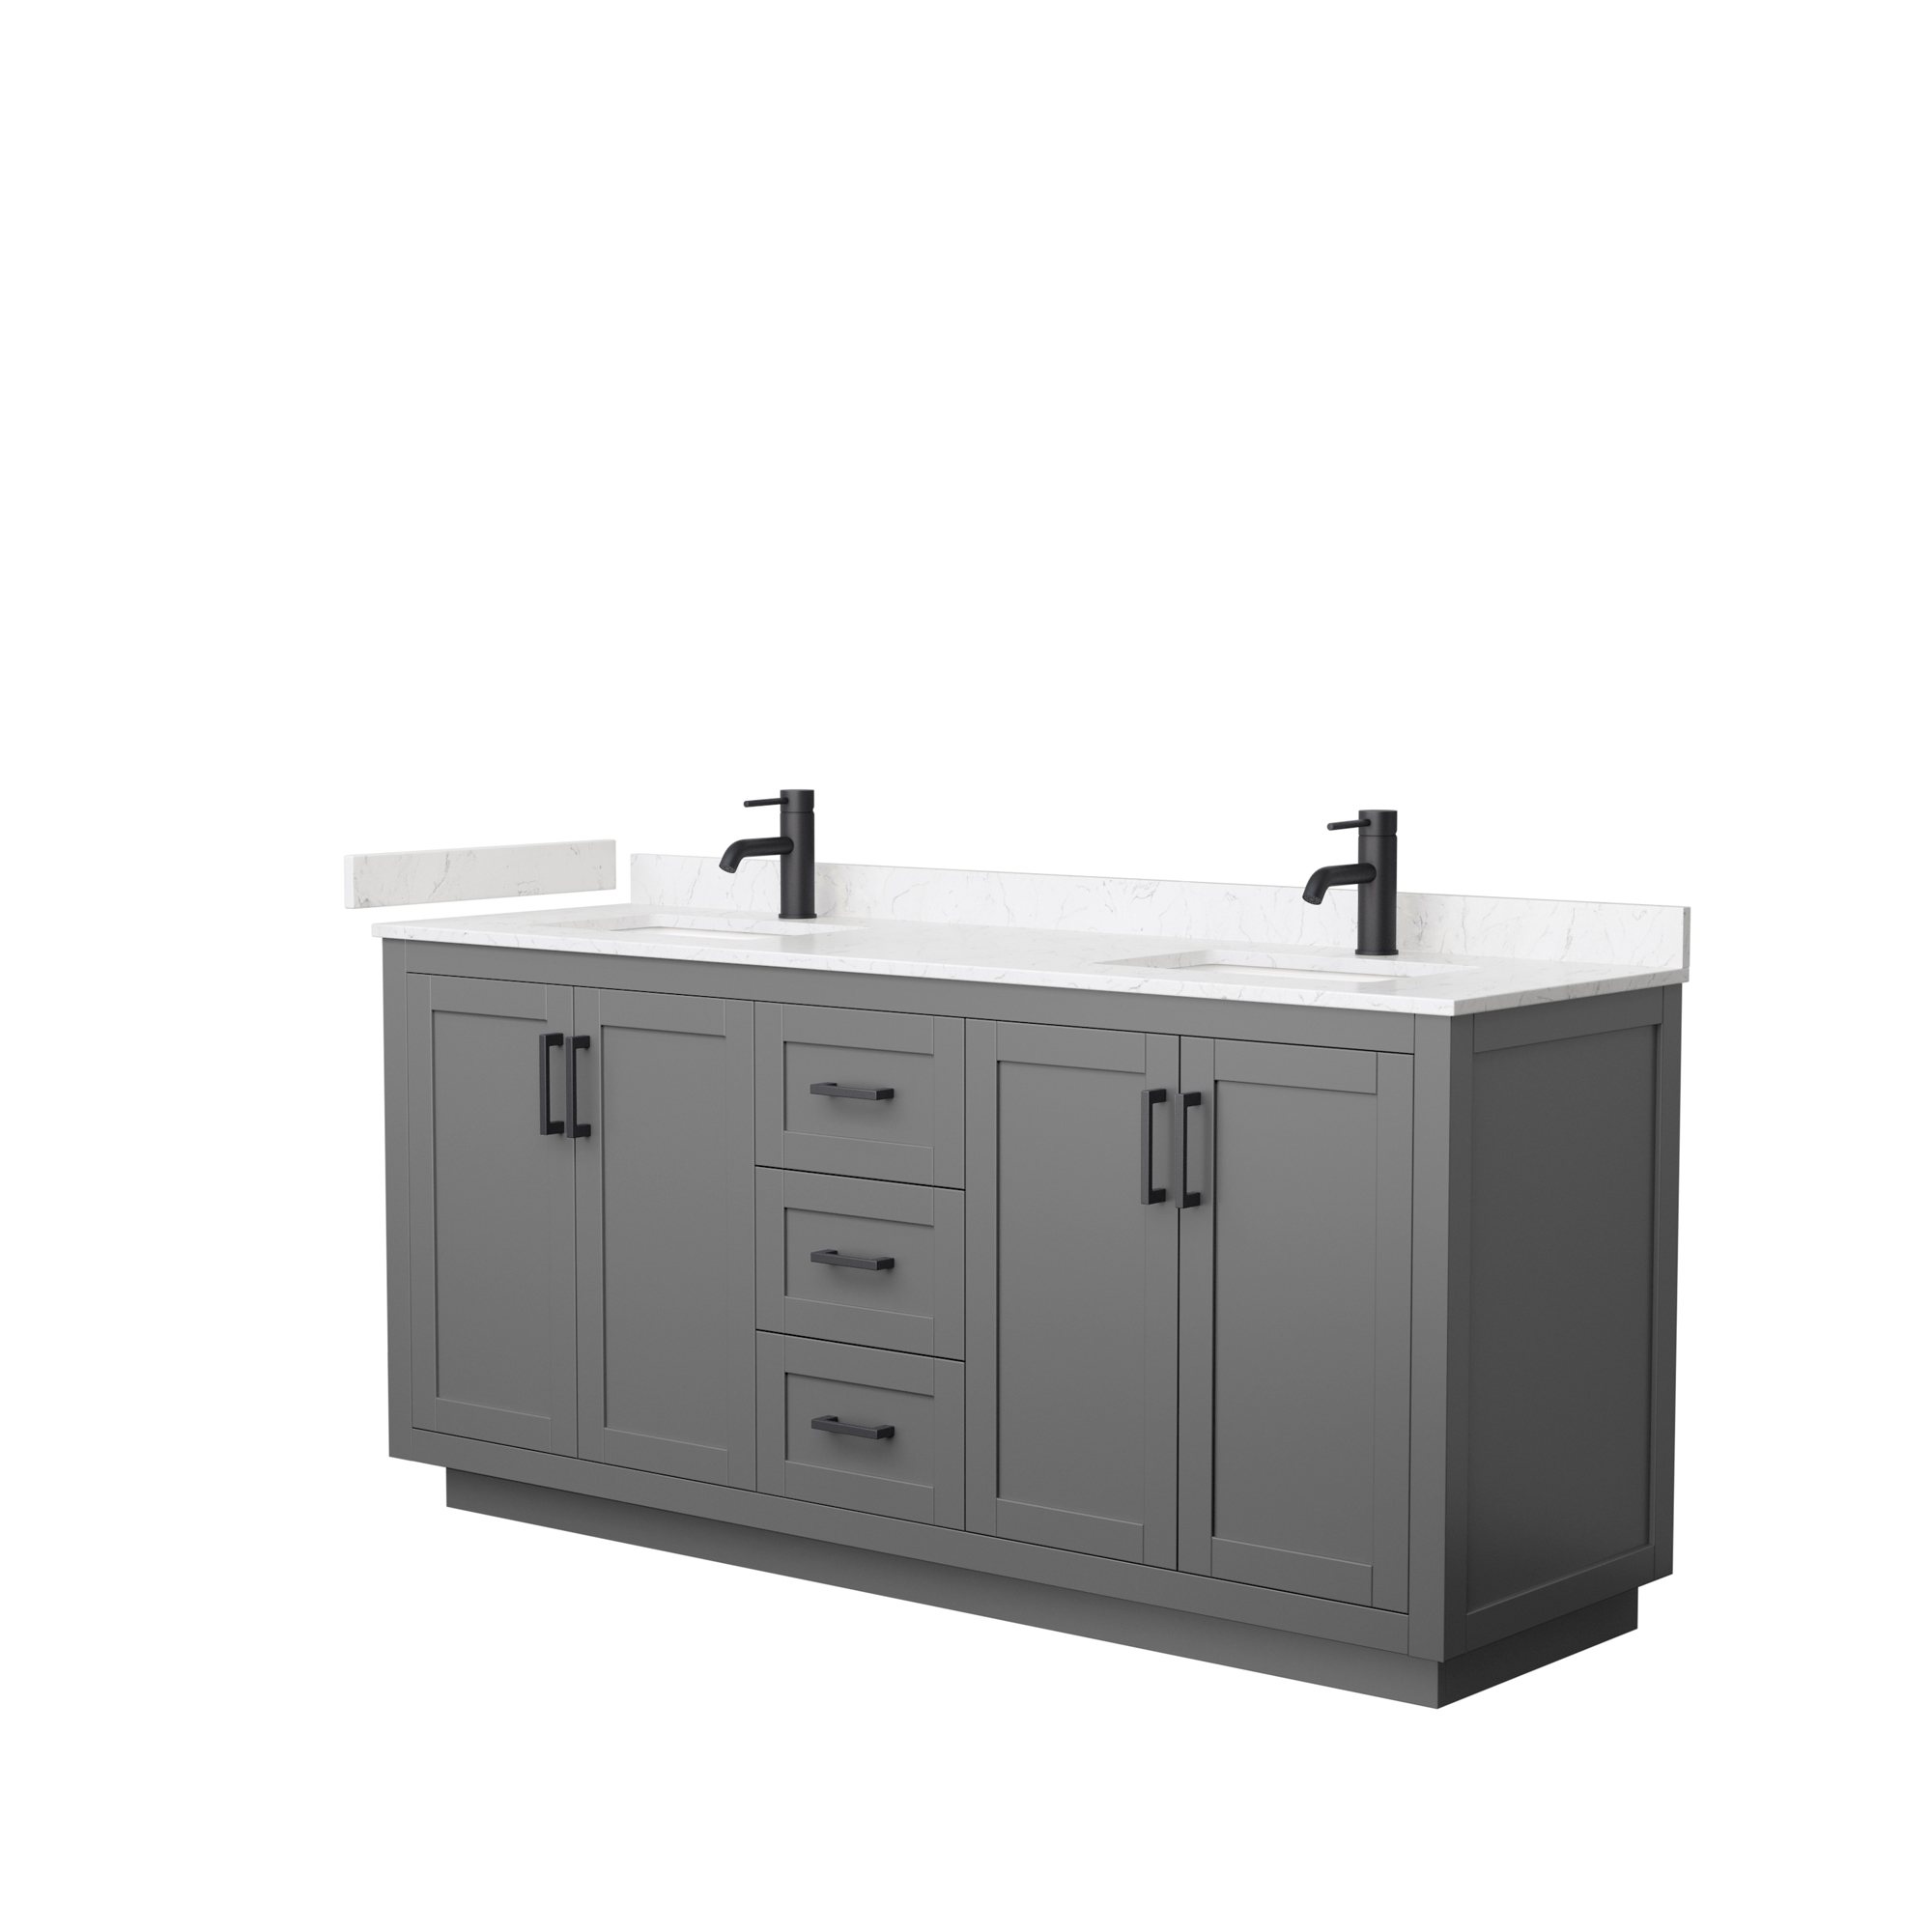 72" Double Bathroom Vanity in Dark Gray, Light-Vein Carrara Cultured Marble Countertop, Undermount Square Sinks, Matte Black Trim